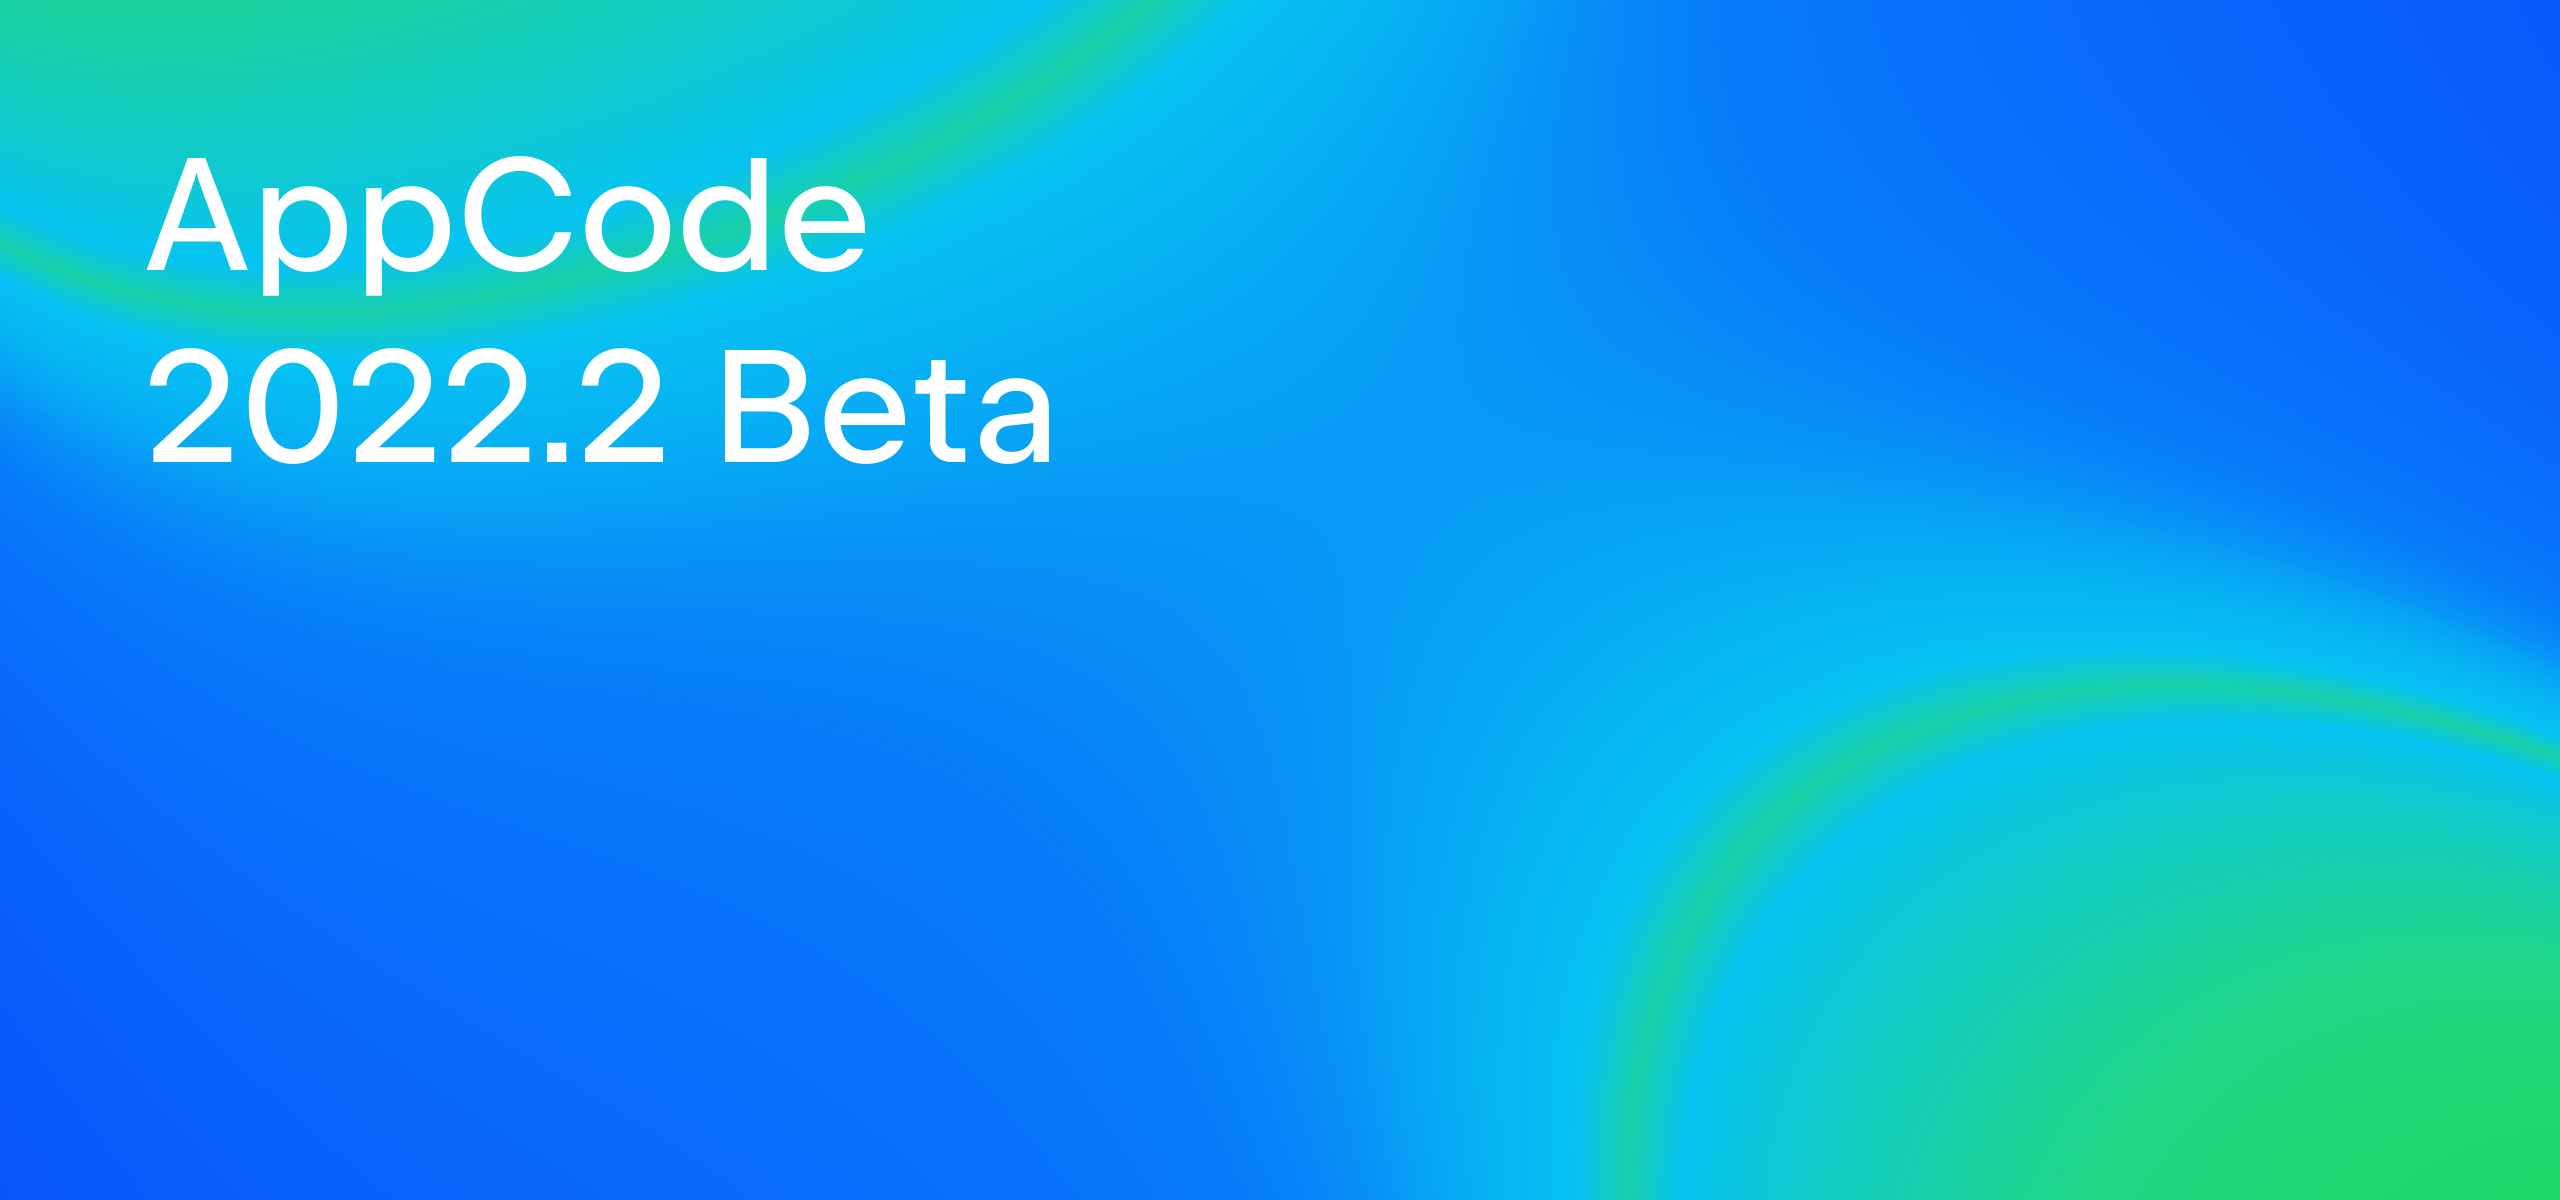 AppCode 2022.2 Beta